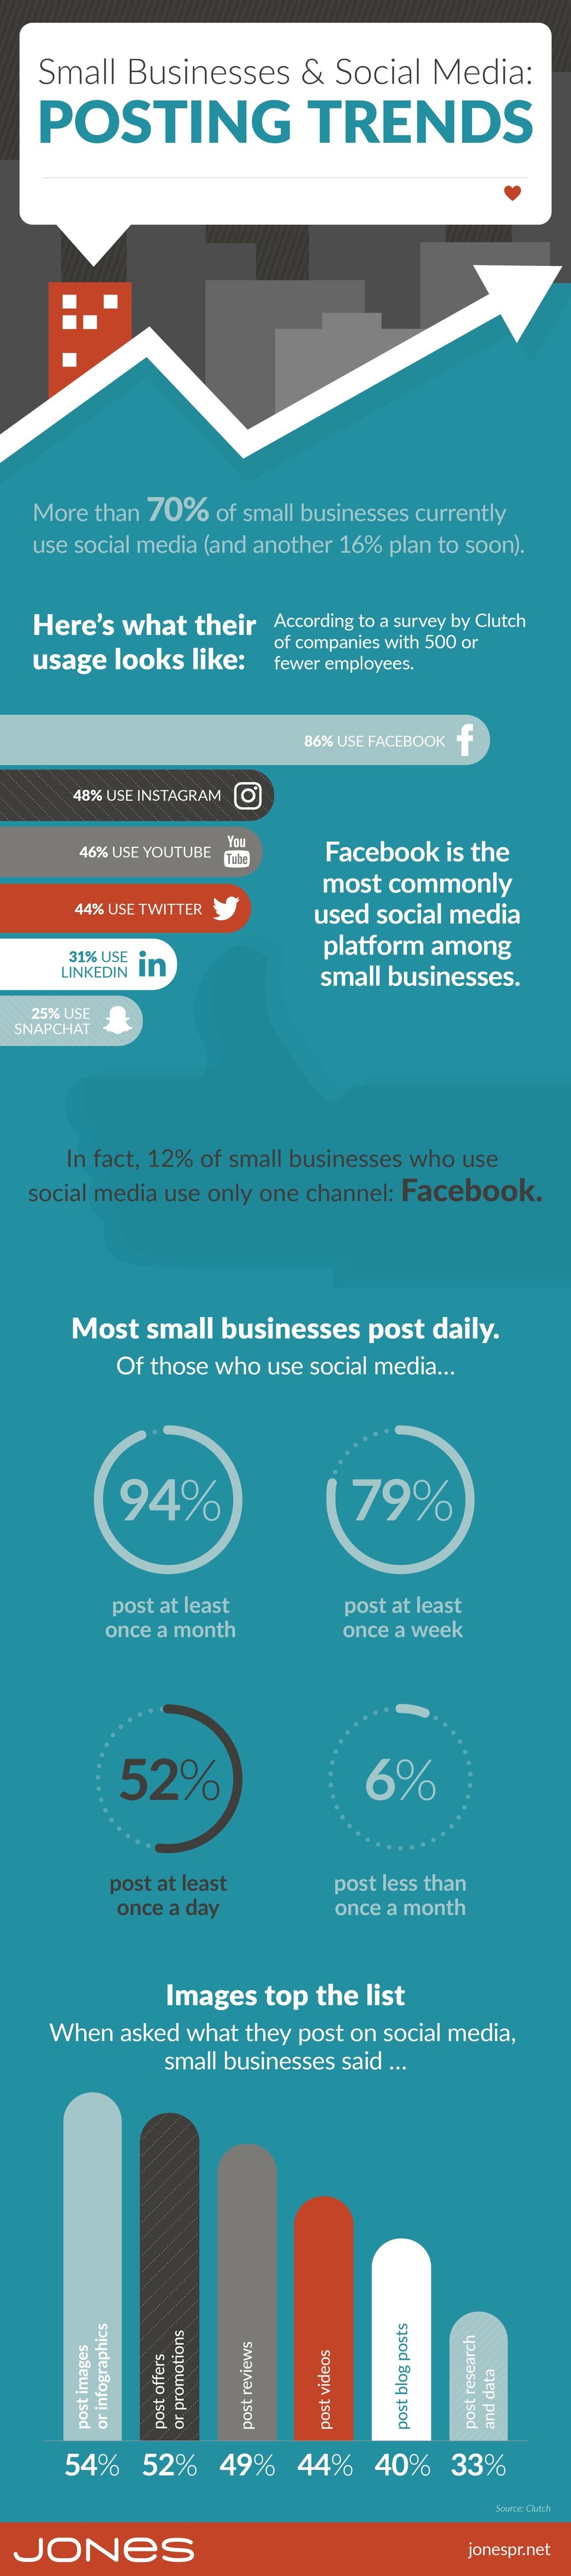 jones-infographic-small-biz-social-media-posting-trends-v2-01